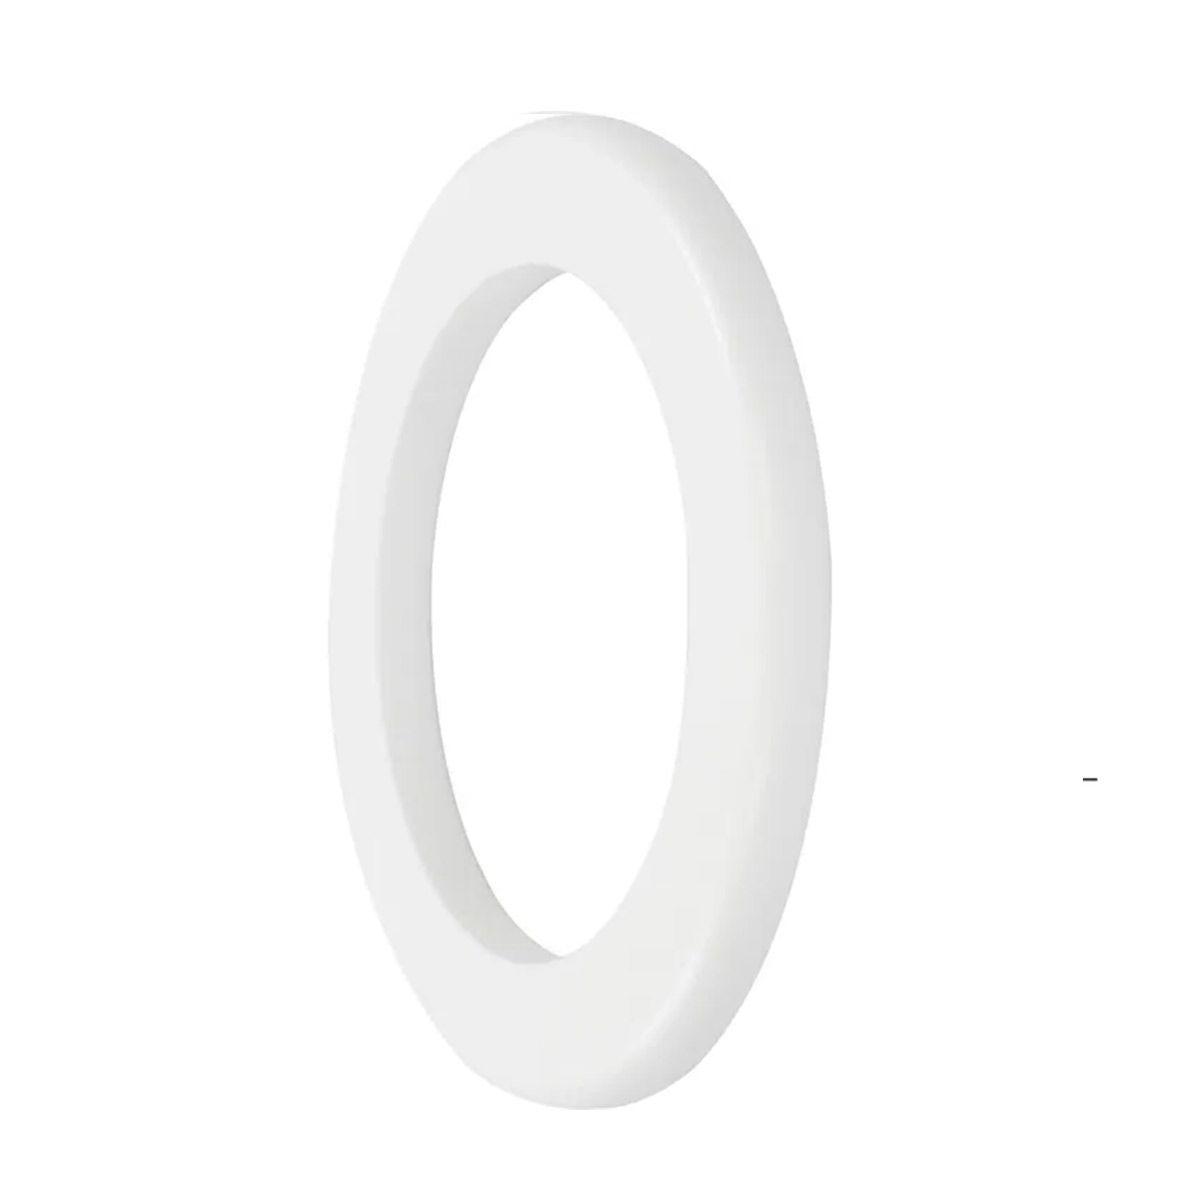 6.5″ SPEAKER TRIM RING,  6.5″ X .5″ THICK – WHITE | TRIMRING6.5x.5